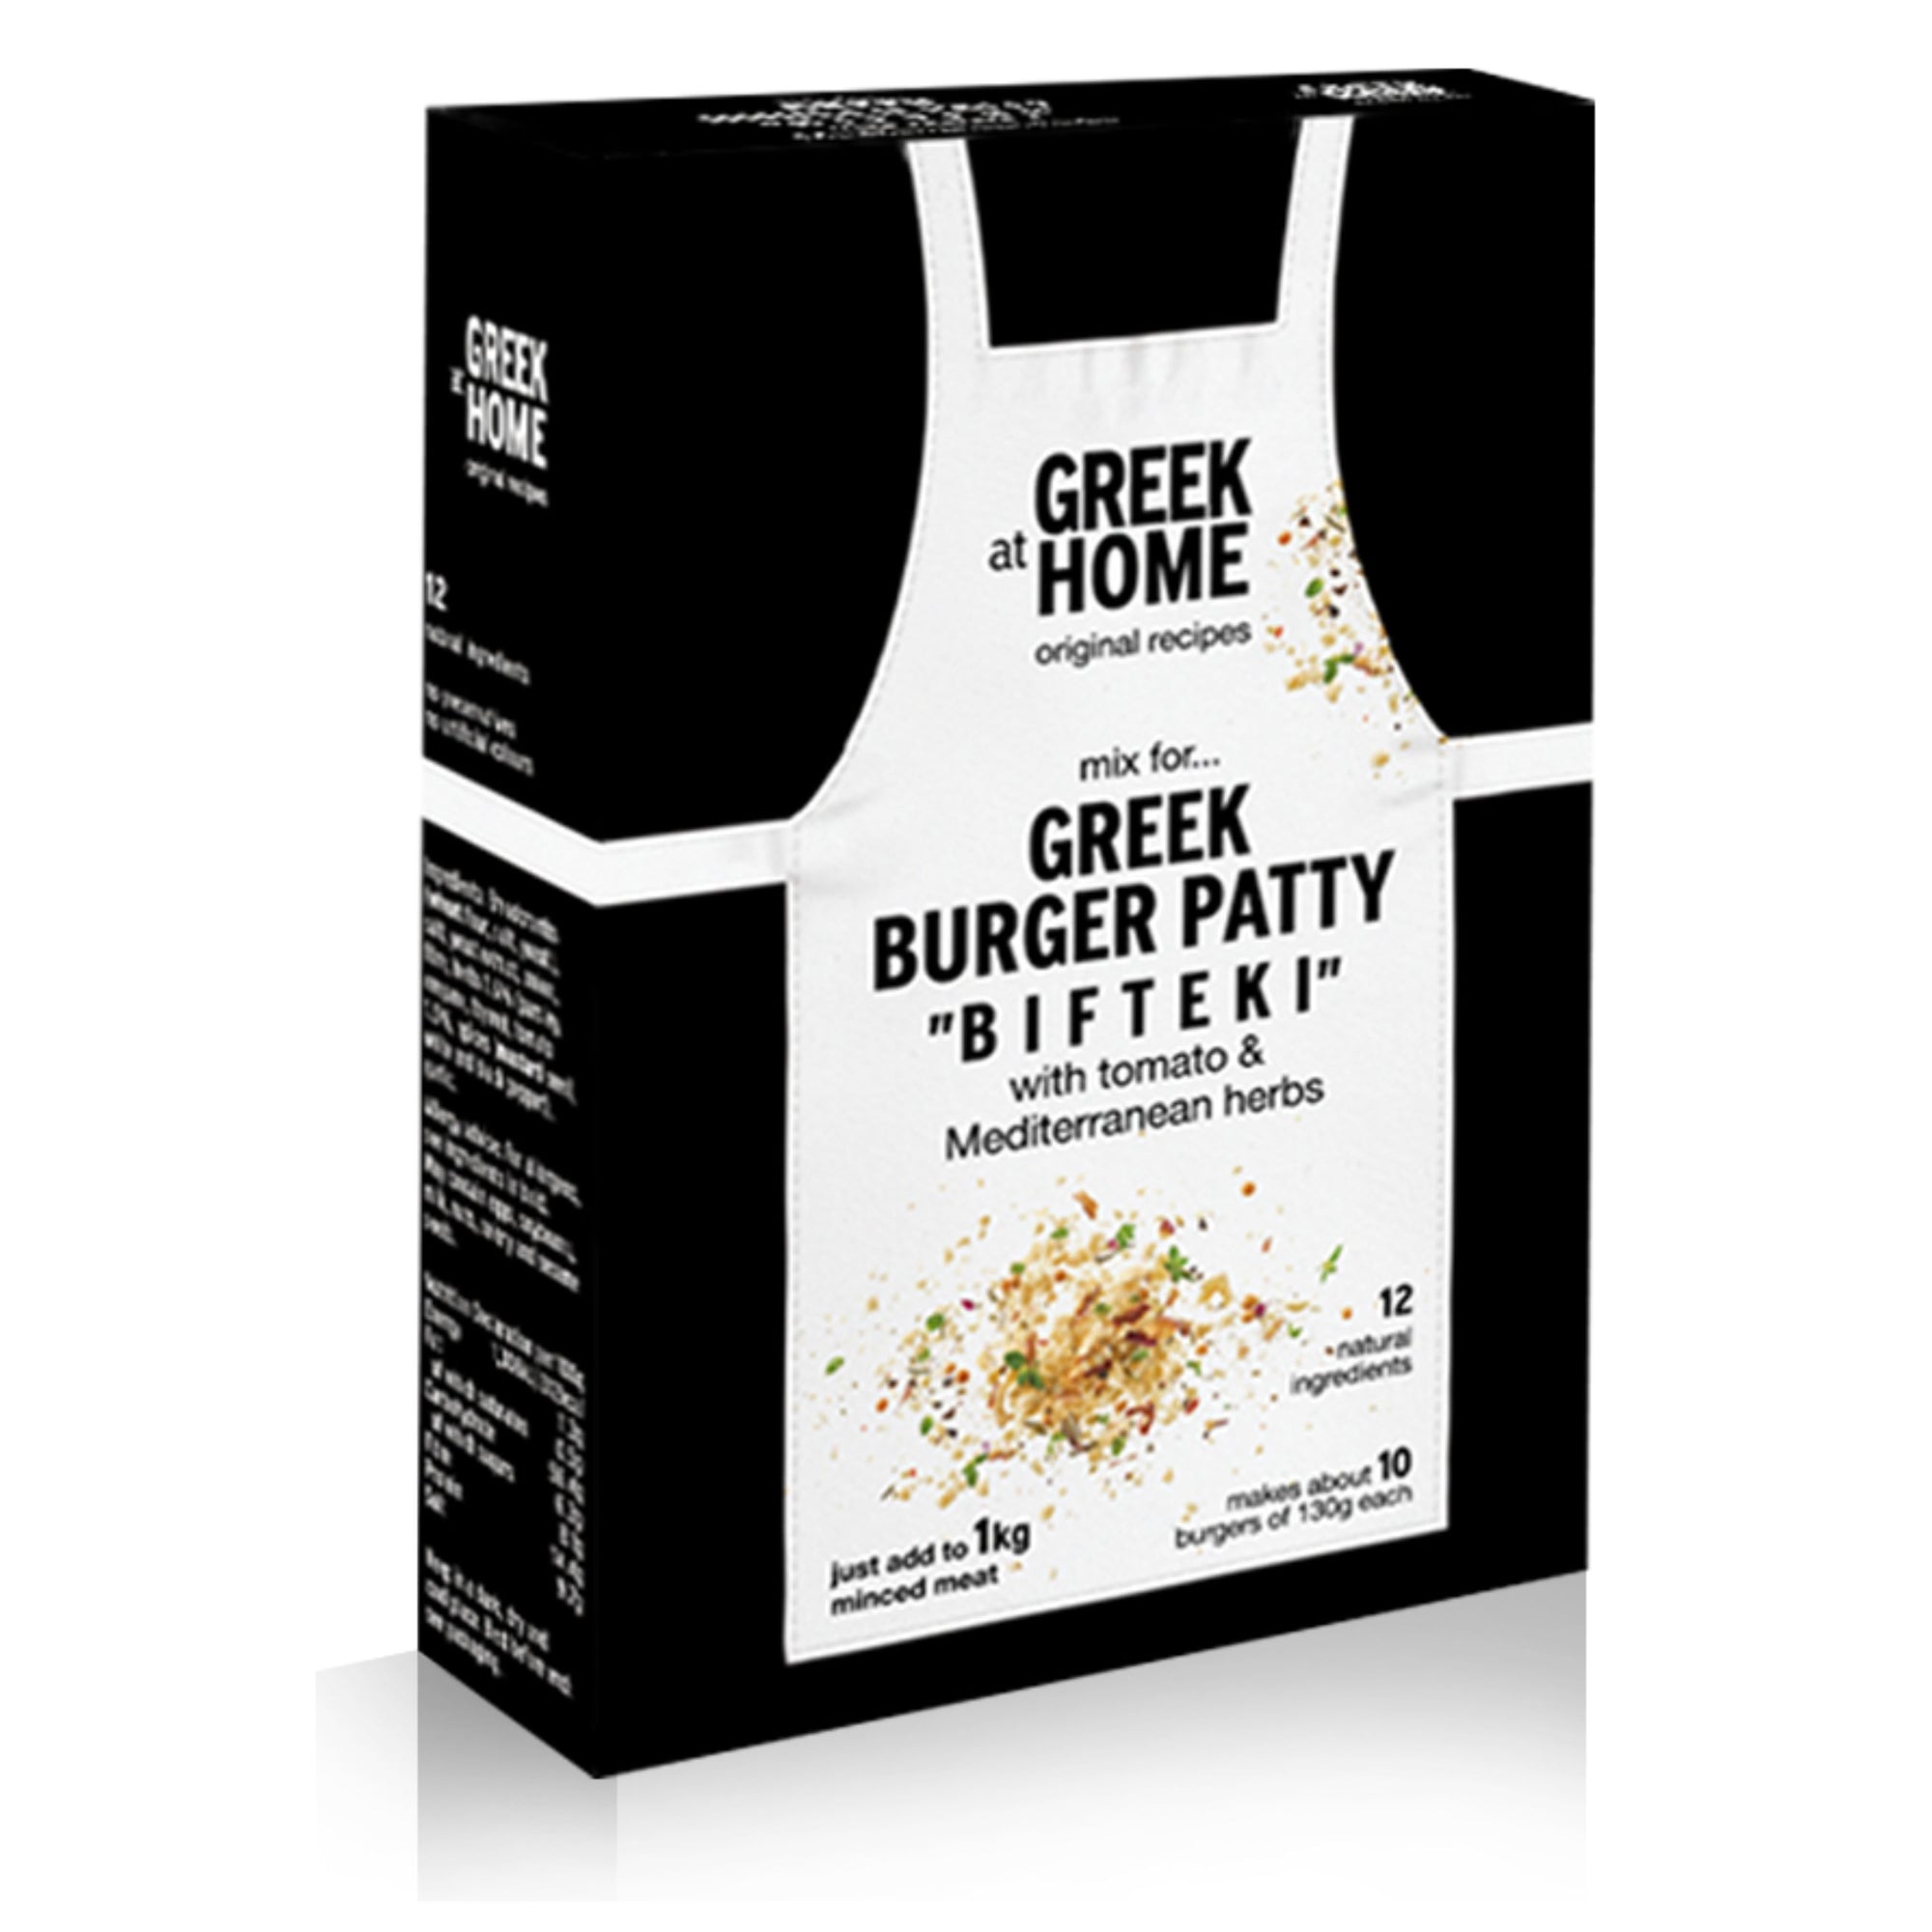 Greek Burger Patty "Bifteki"  Spice Mix 130g